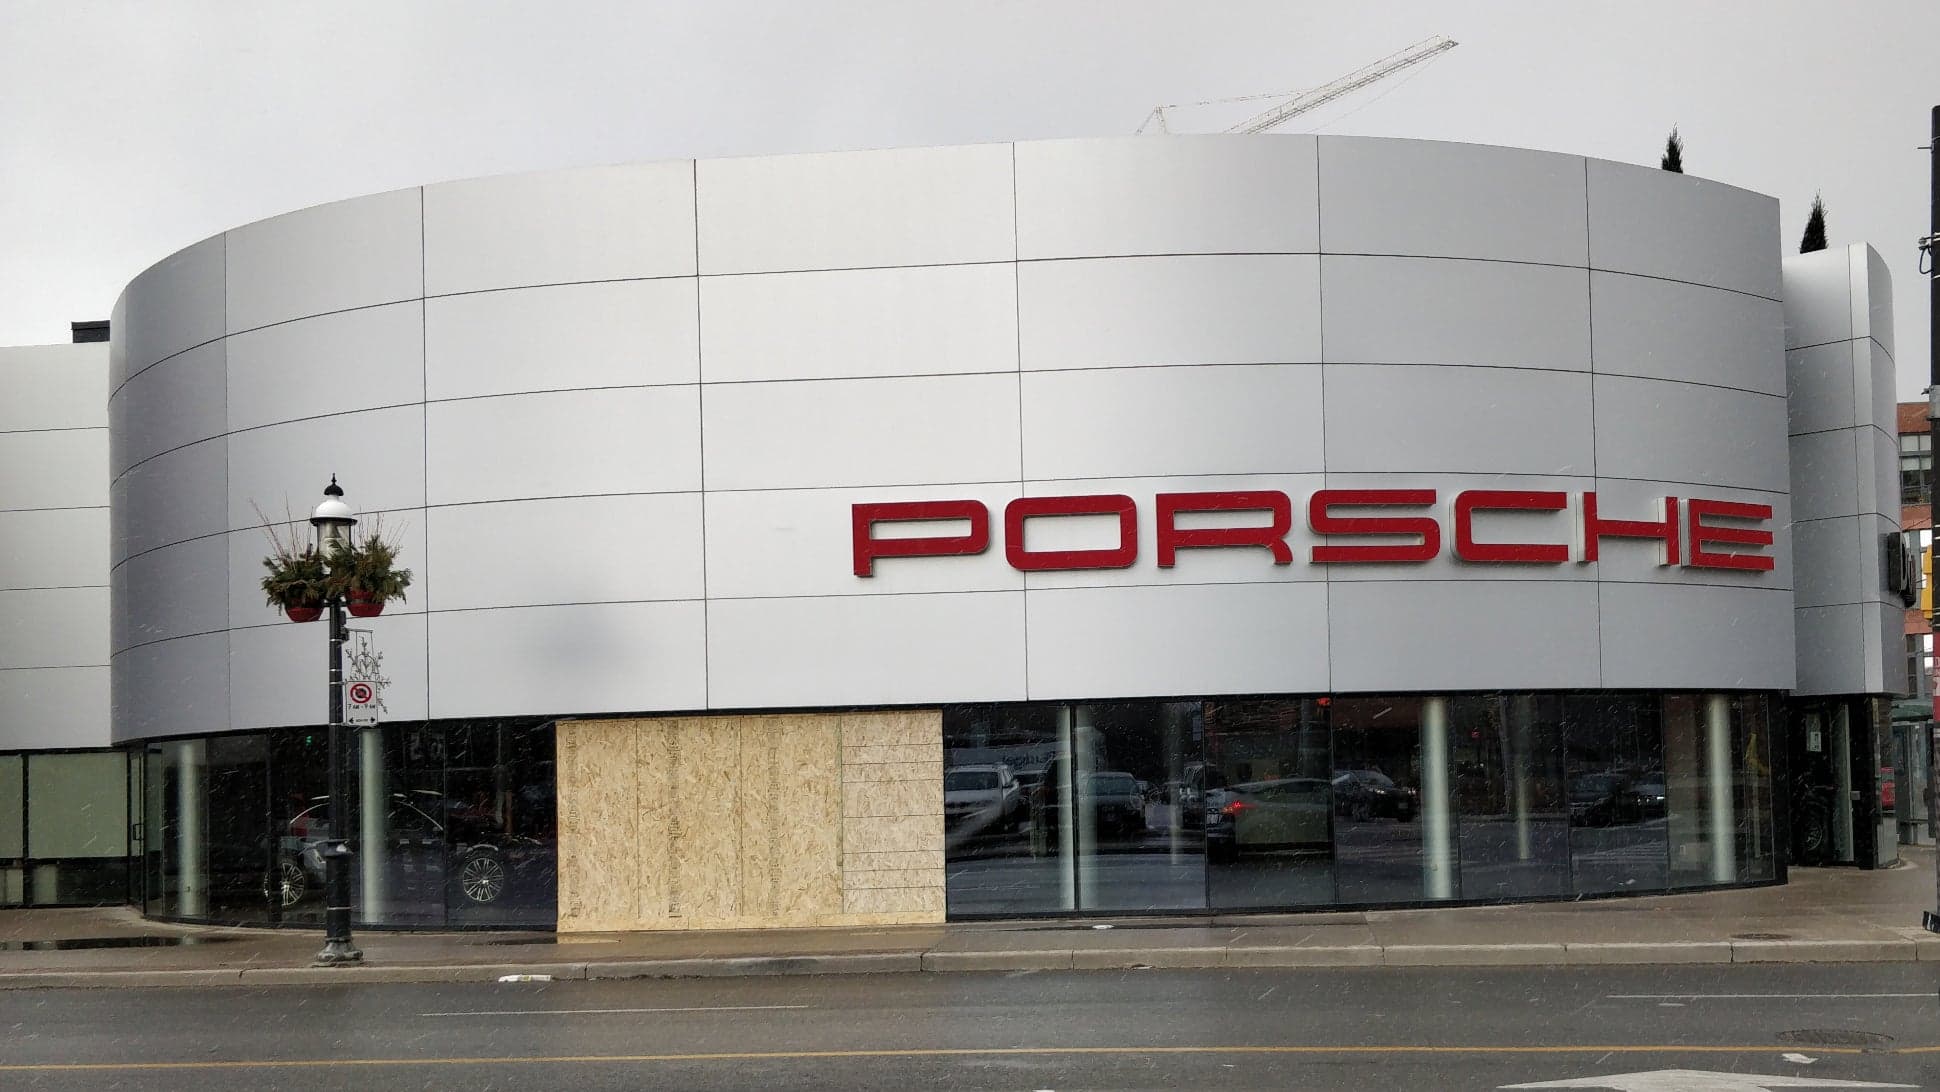 Heartbroken Man Crashes Toyota Yaris Into Porsche Dealer, Vandalizes Cars With Woman’s Name